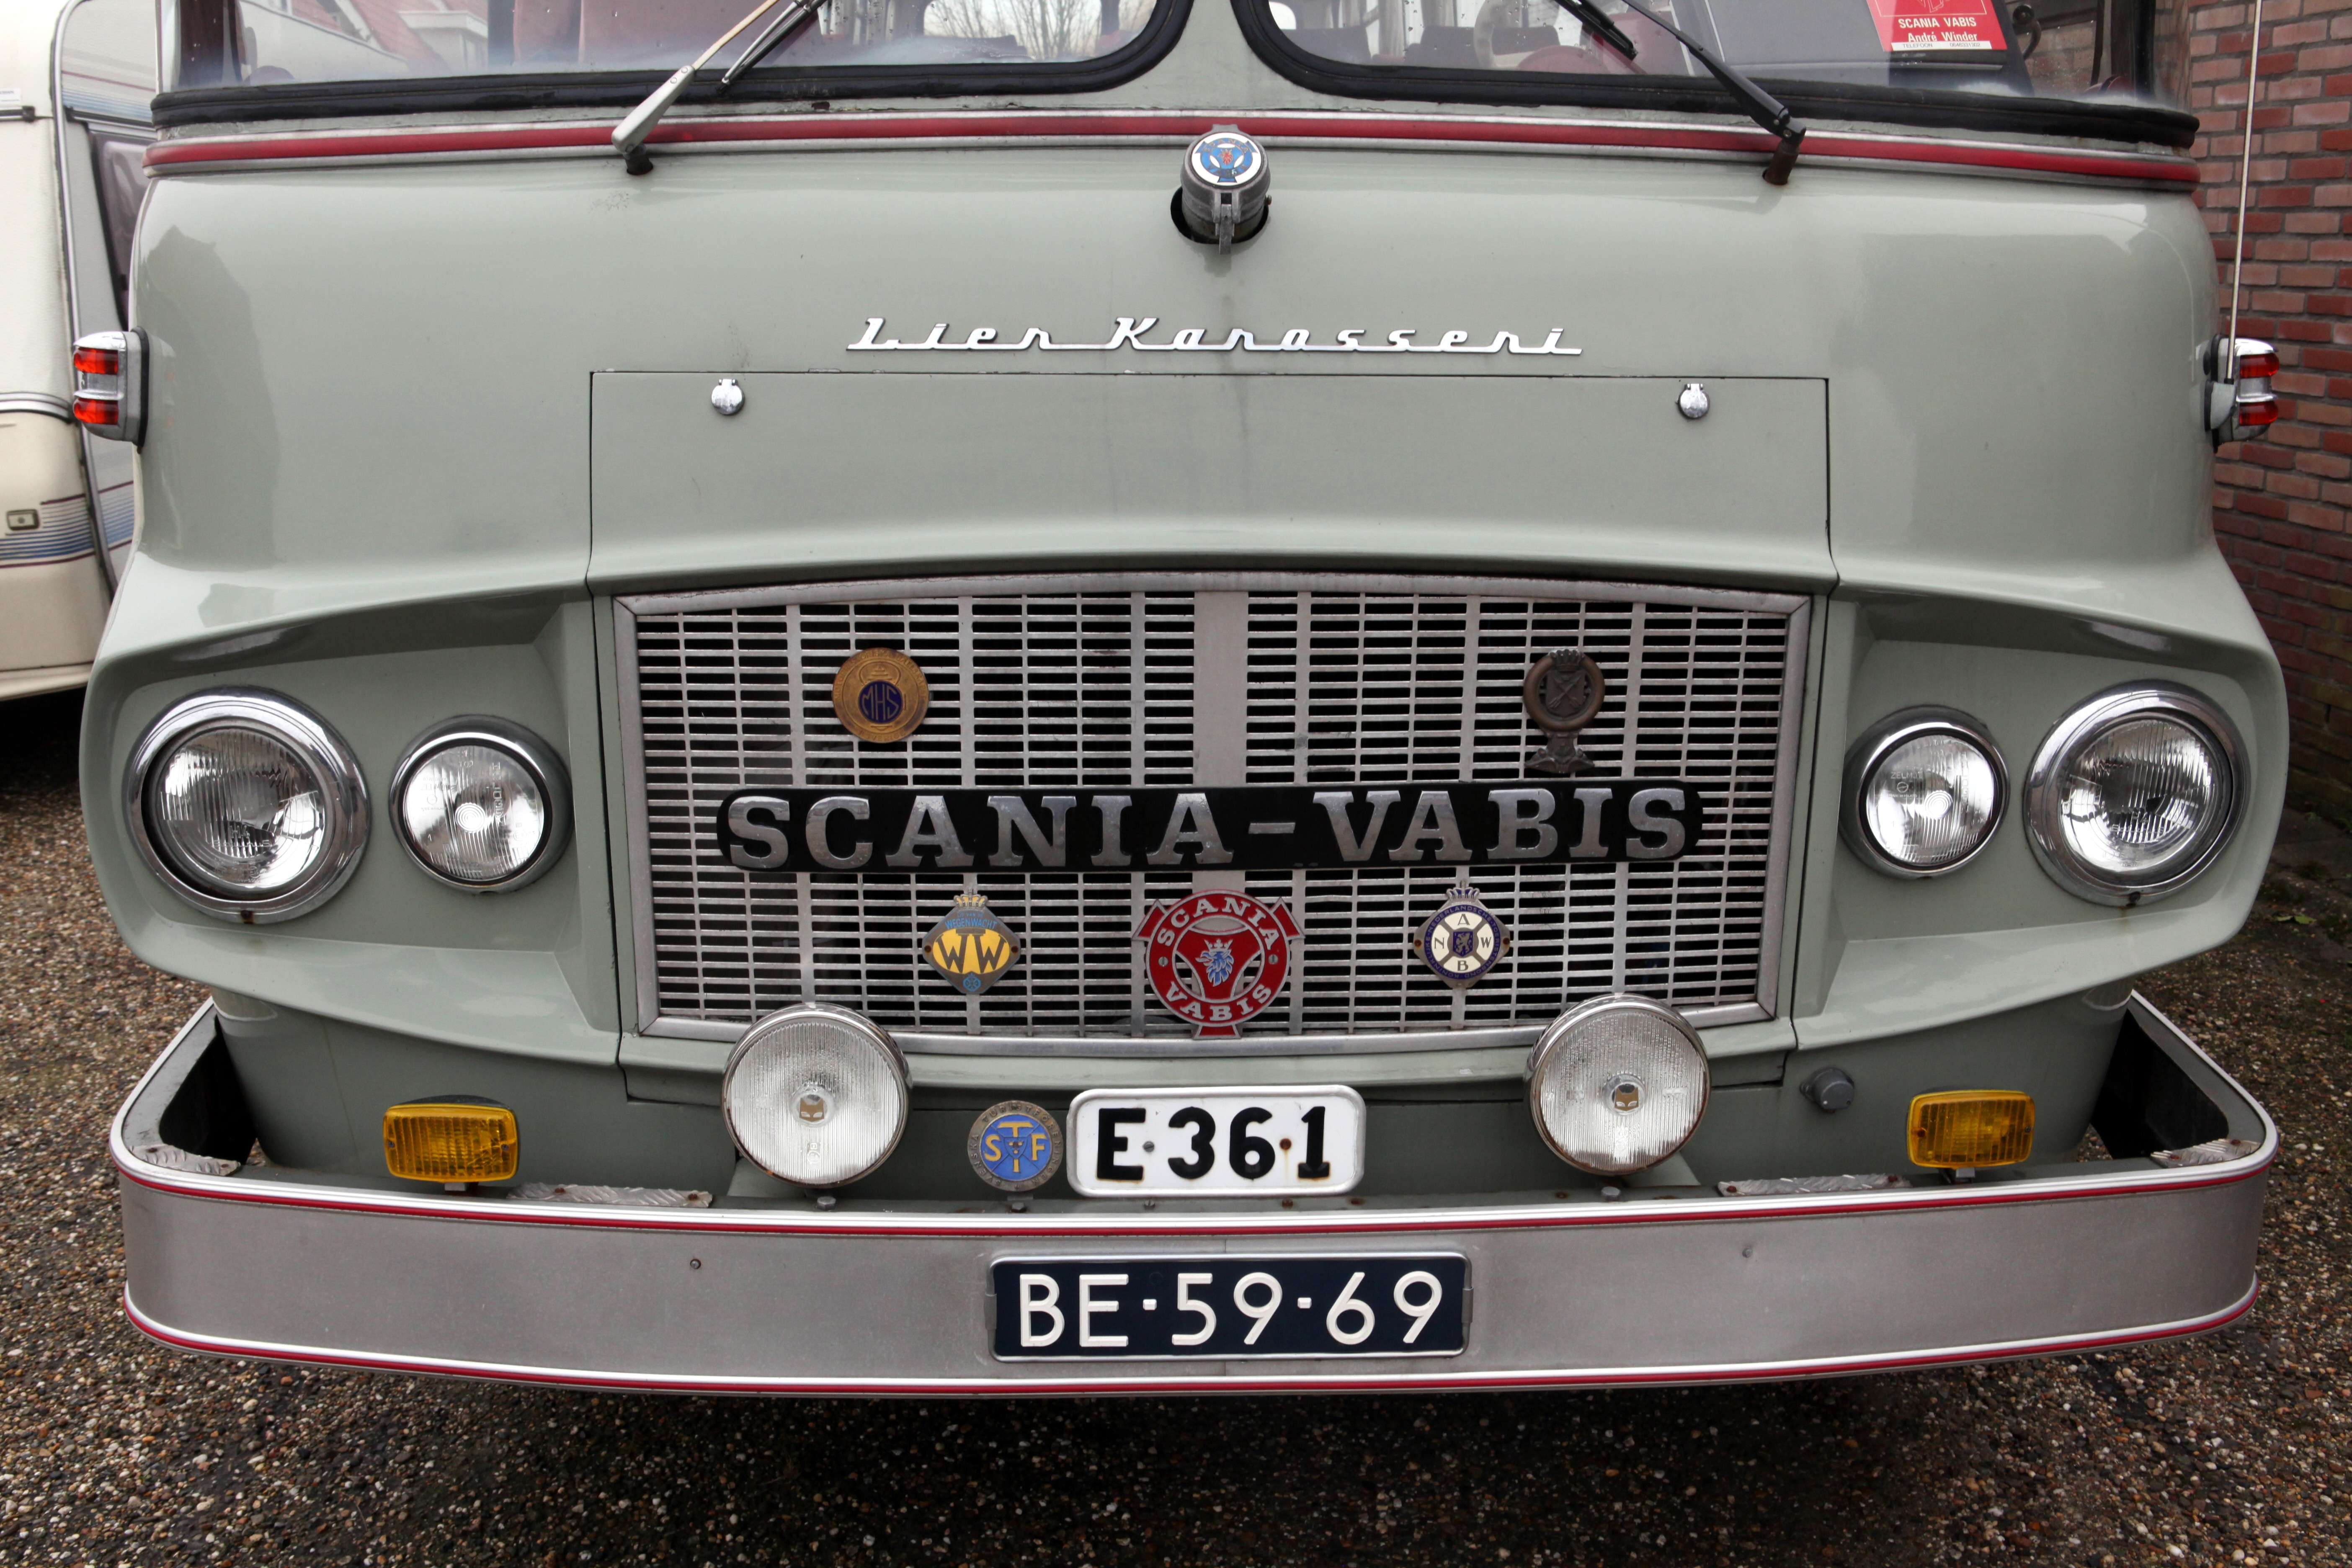 File:Scania-vabis B 56 bus (3).jpg - Wikimedia Commons